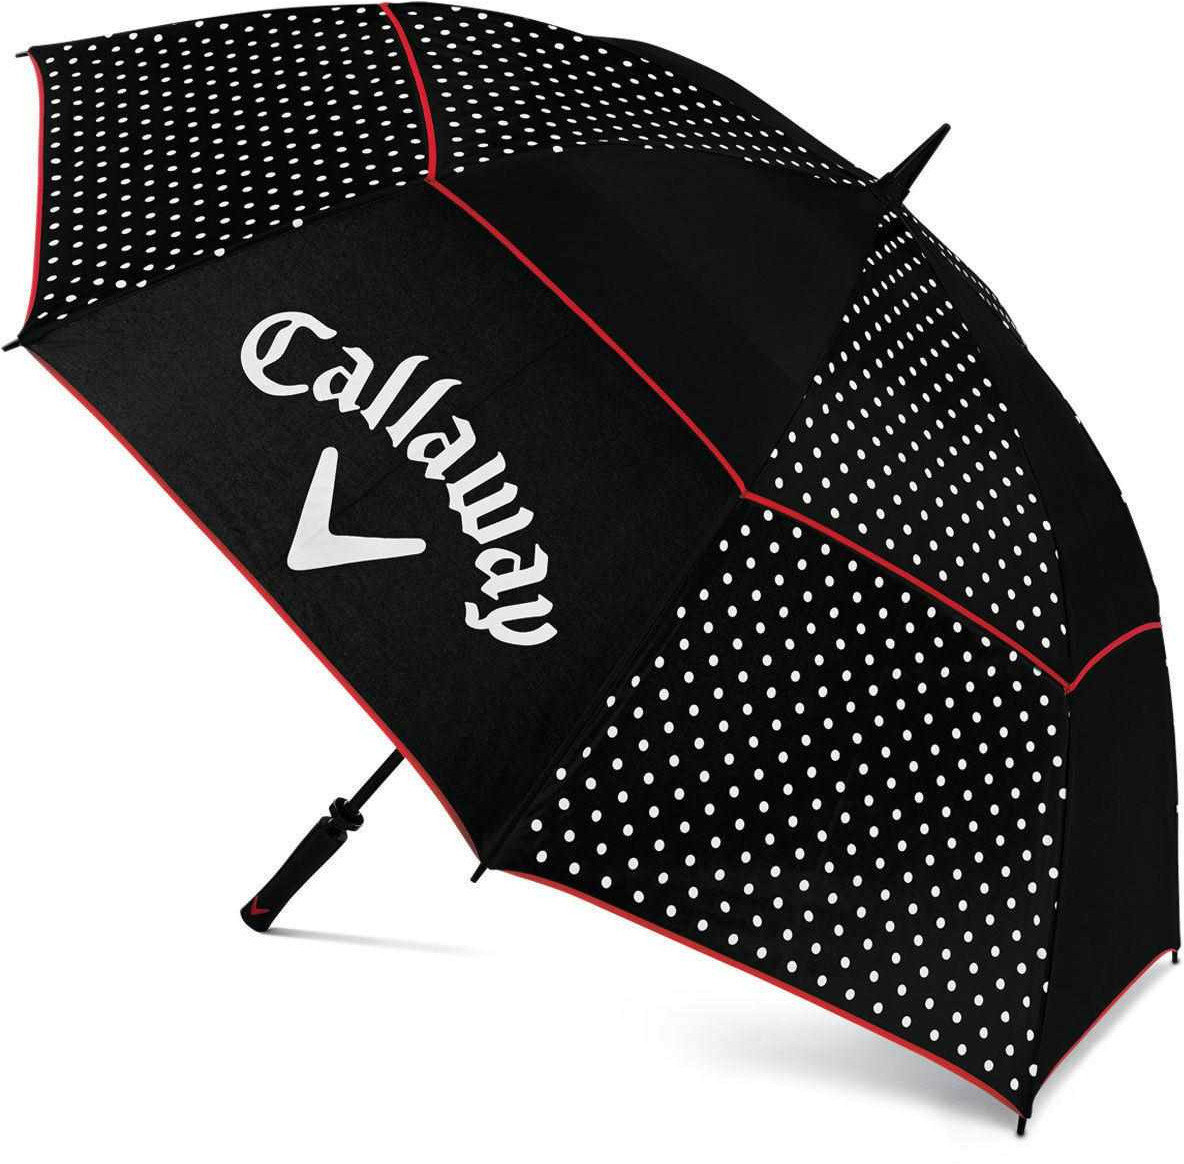 Guarda-chuva Callaway Umbrella Blk/Wht